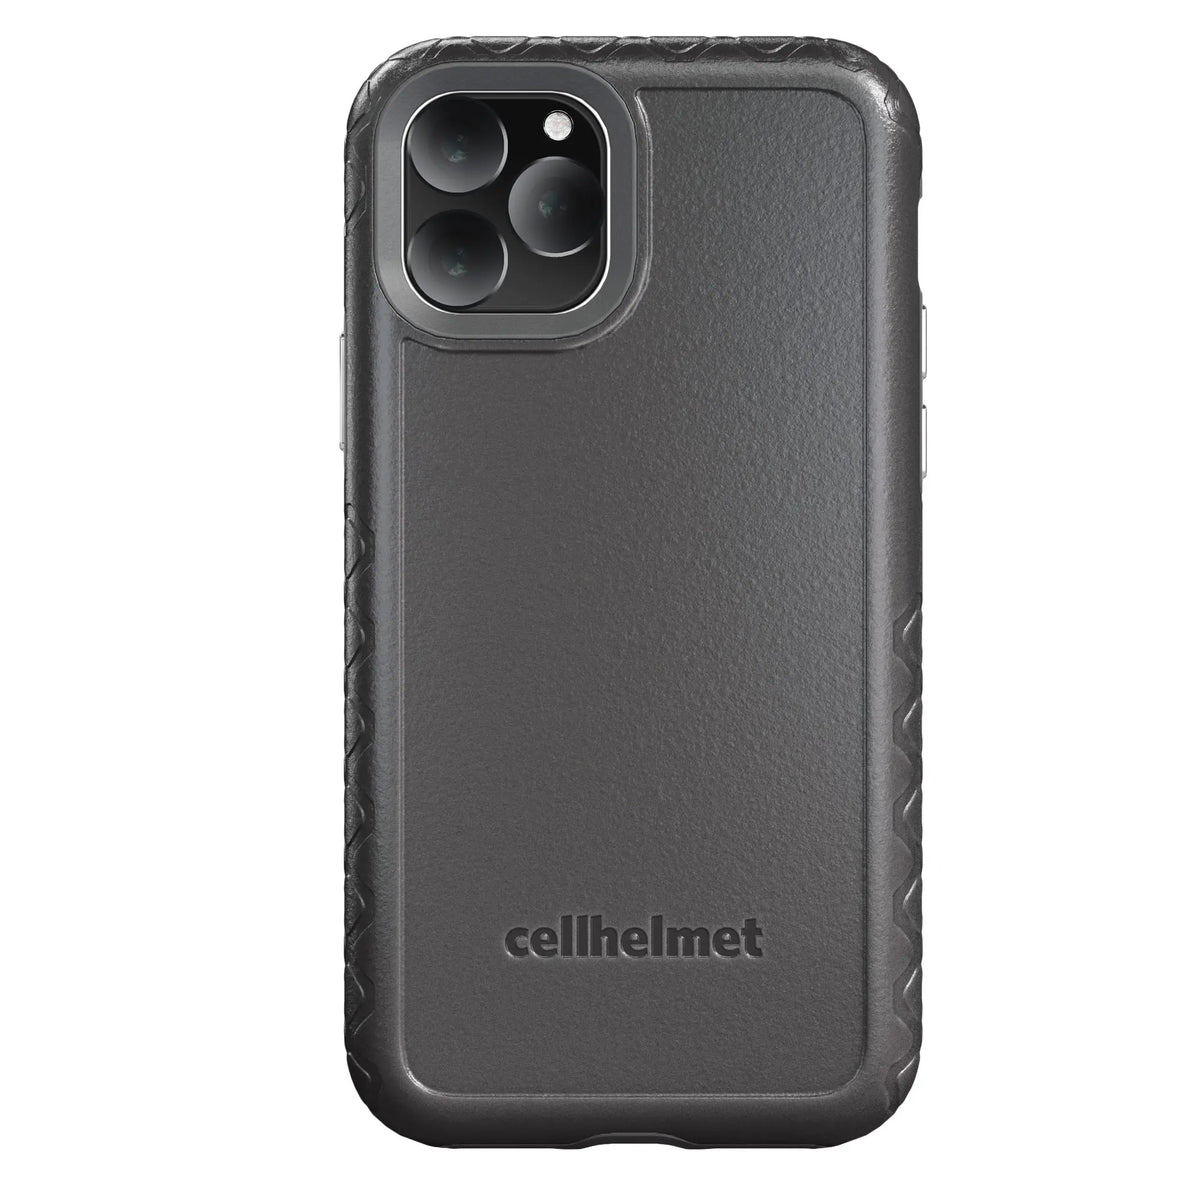 Black cellhelmet Customizable Case for iPhone 11 Pro